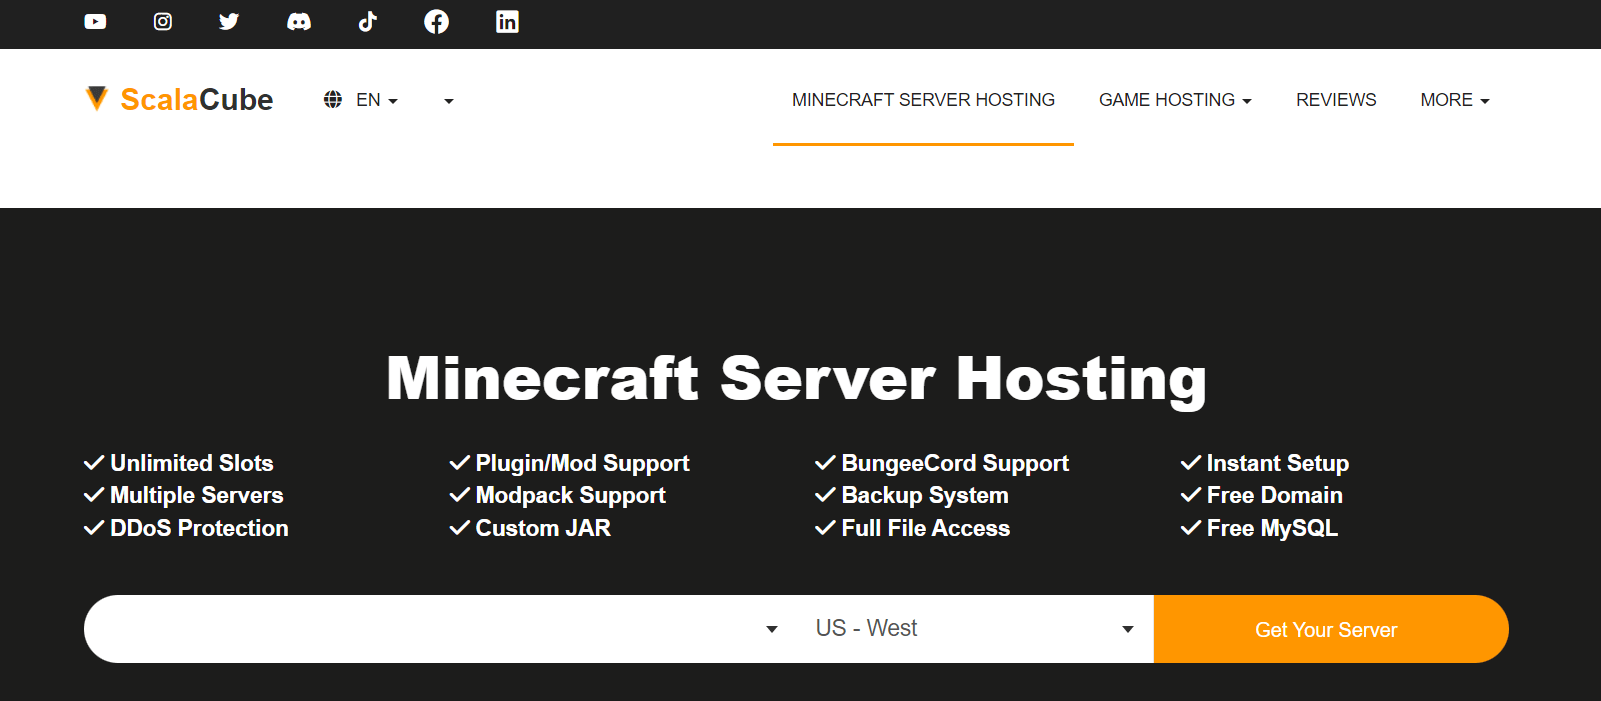 Best Minecraft Server Hosting Providers